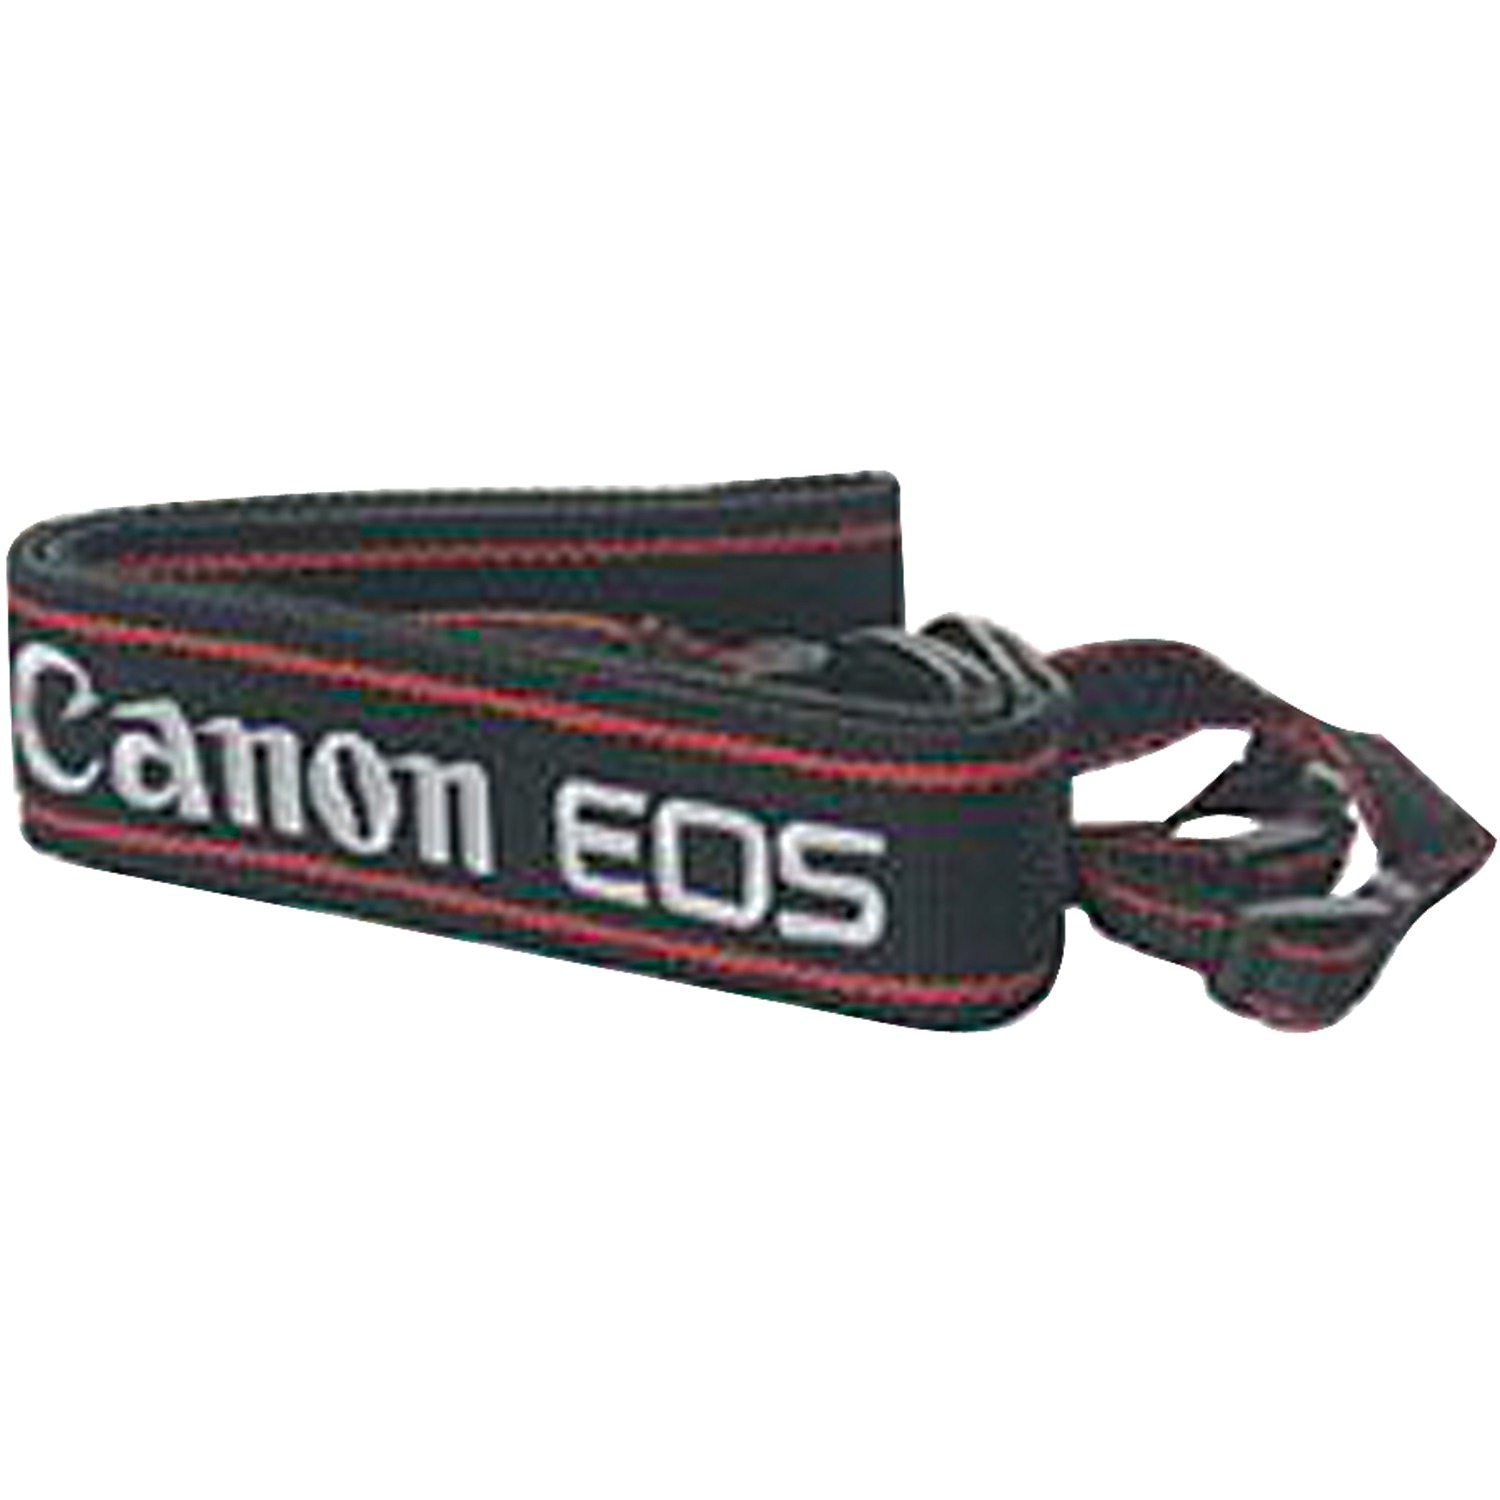 Canon 6255A003 Neck Strap for EOS Rebel Series (Pro neck strap) - image 1 of 2